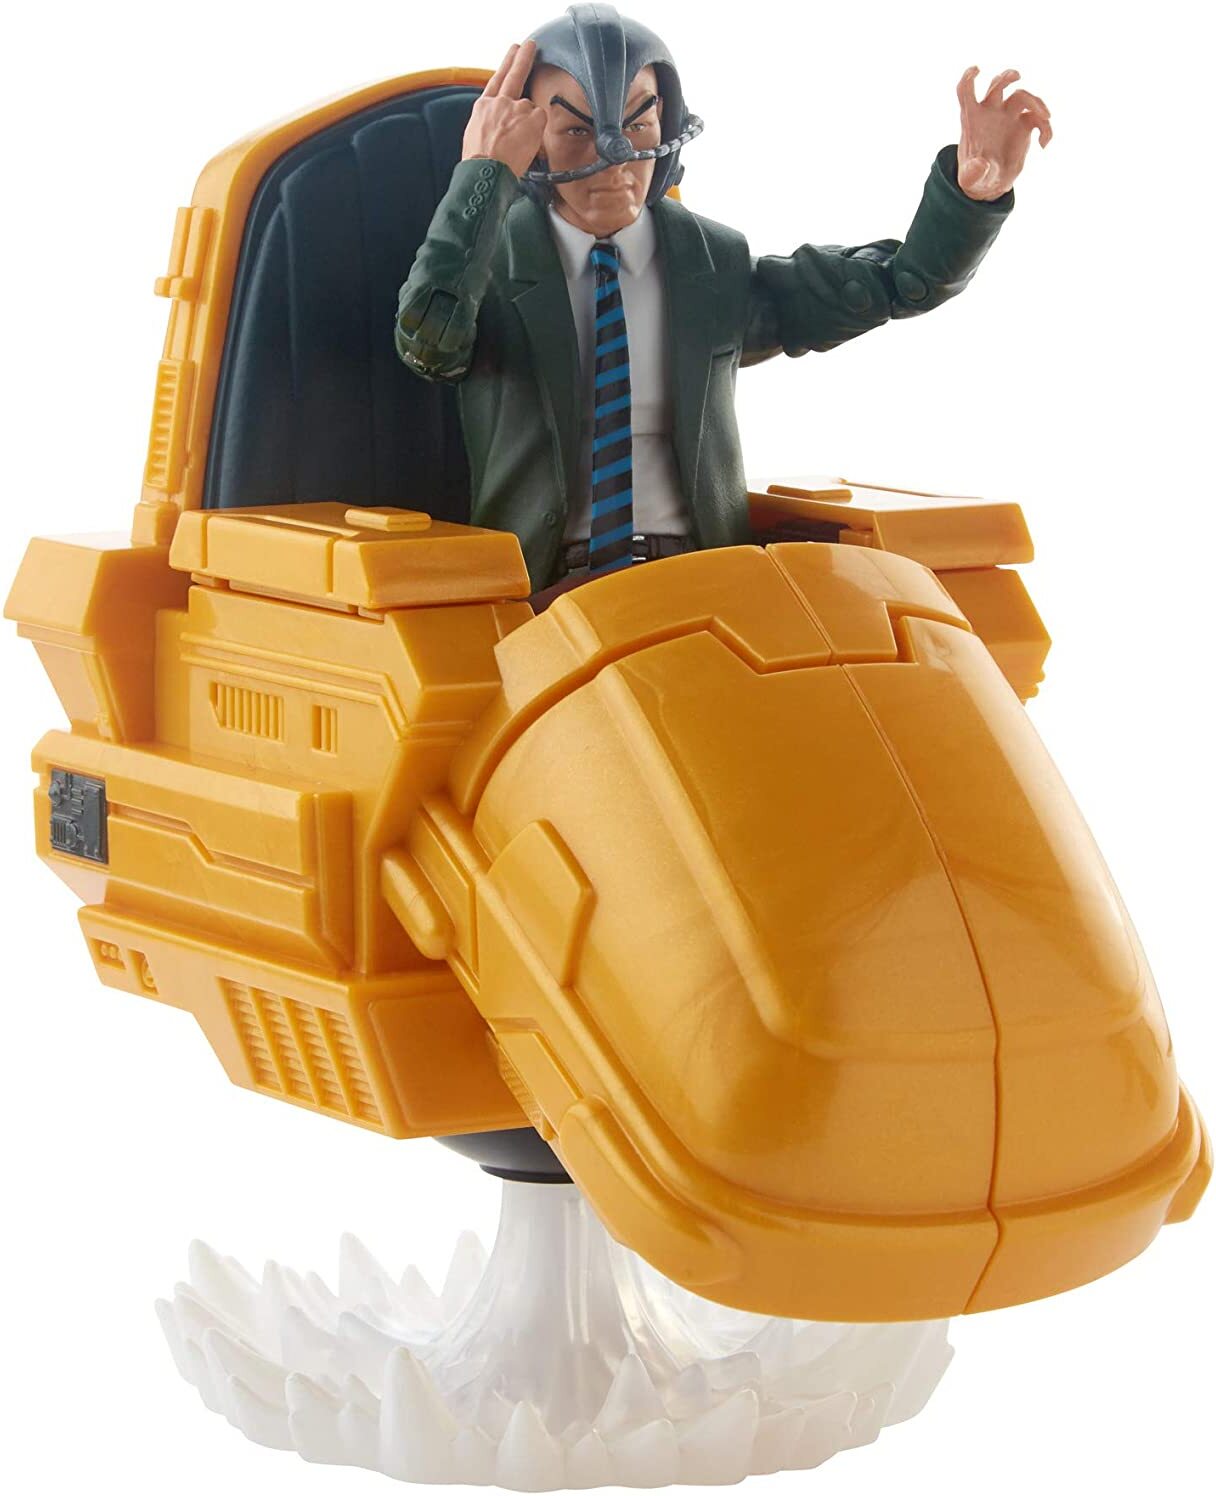 Marvel Legends Serie 15 cm großer Professor X mit schwebendem Stuhl